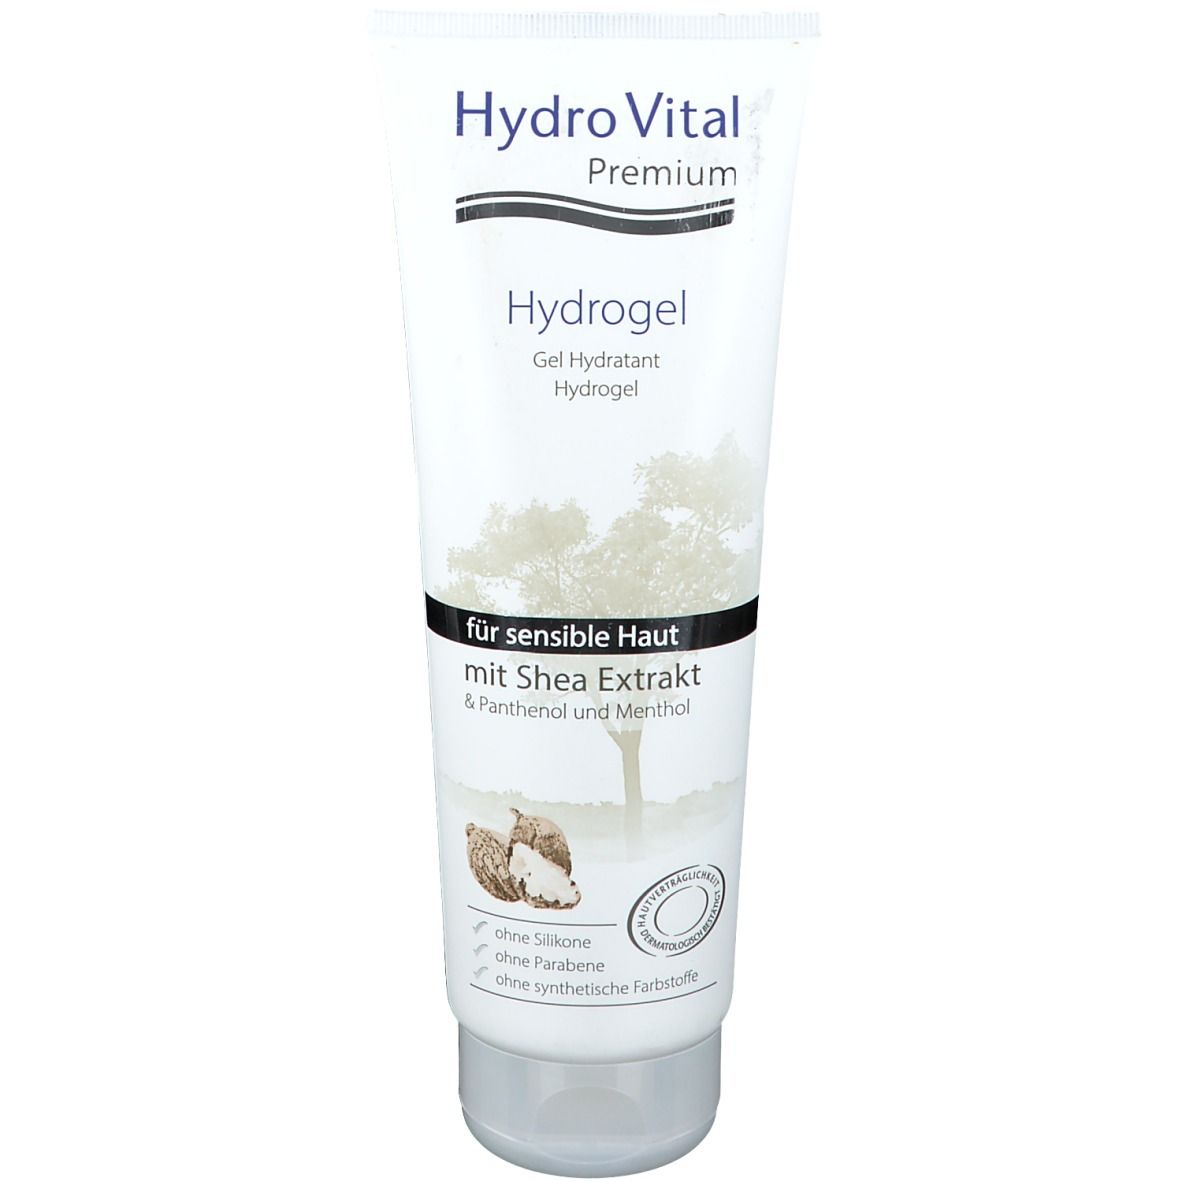 Hydro Vital® Premium Hydrogel